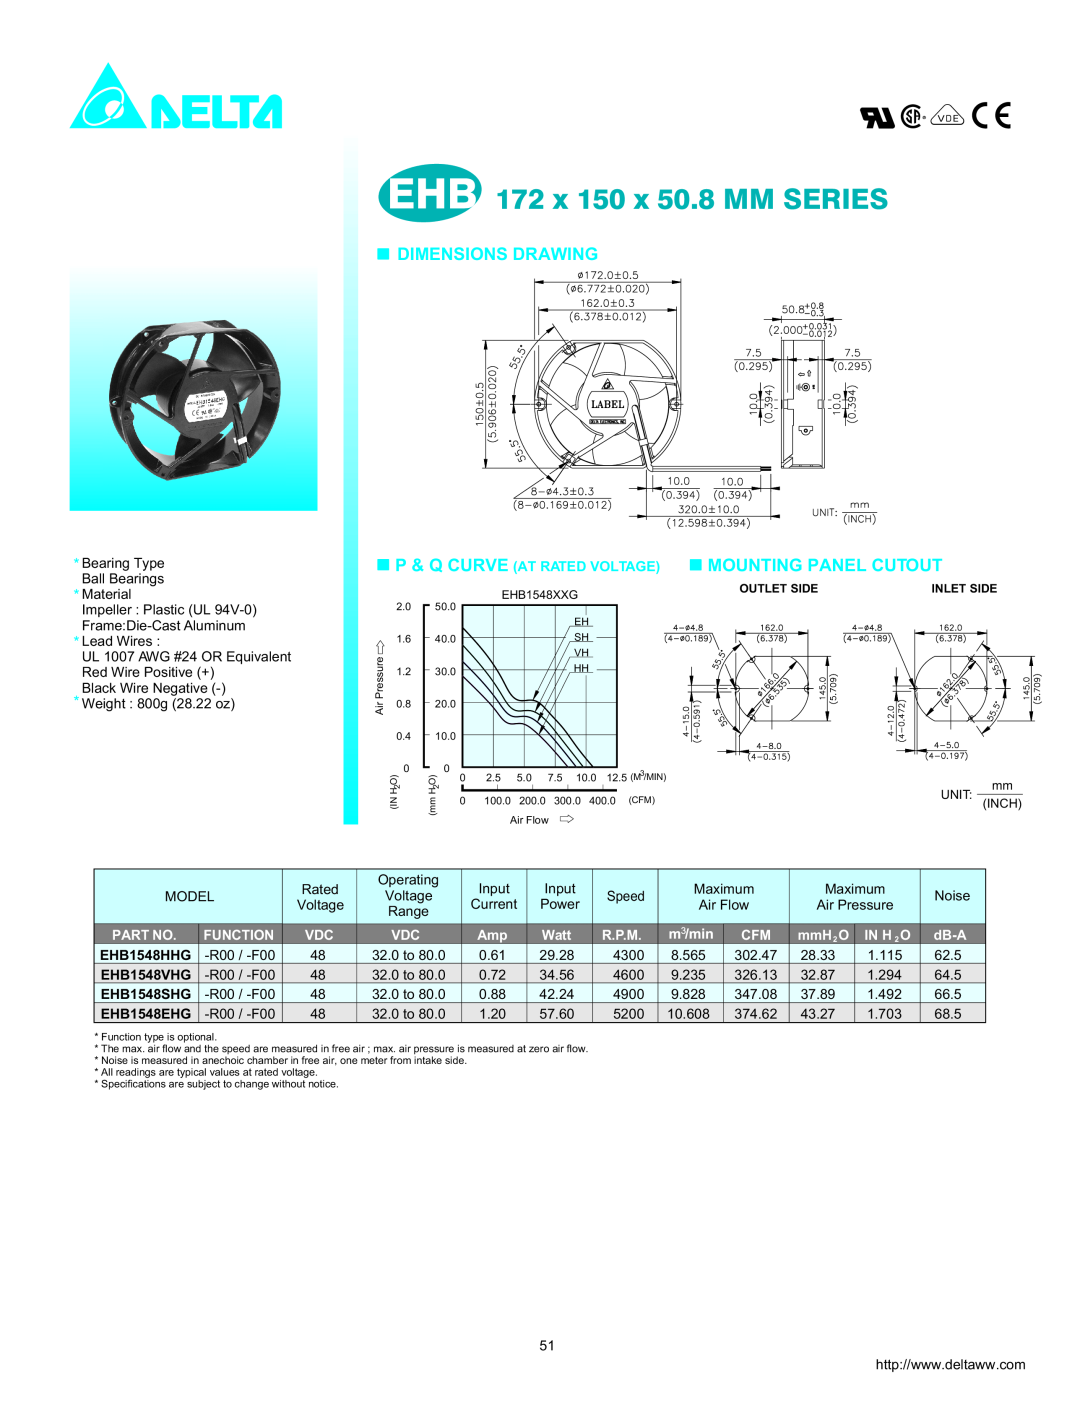 Delta Electronics EHB Series dimensions EHB 172 x 150 x 50.8 MM SERIES, Dimensions Drawing, Mounting Panel Cutout, Watt 